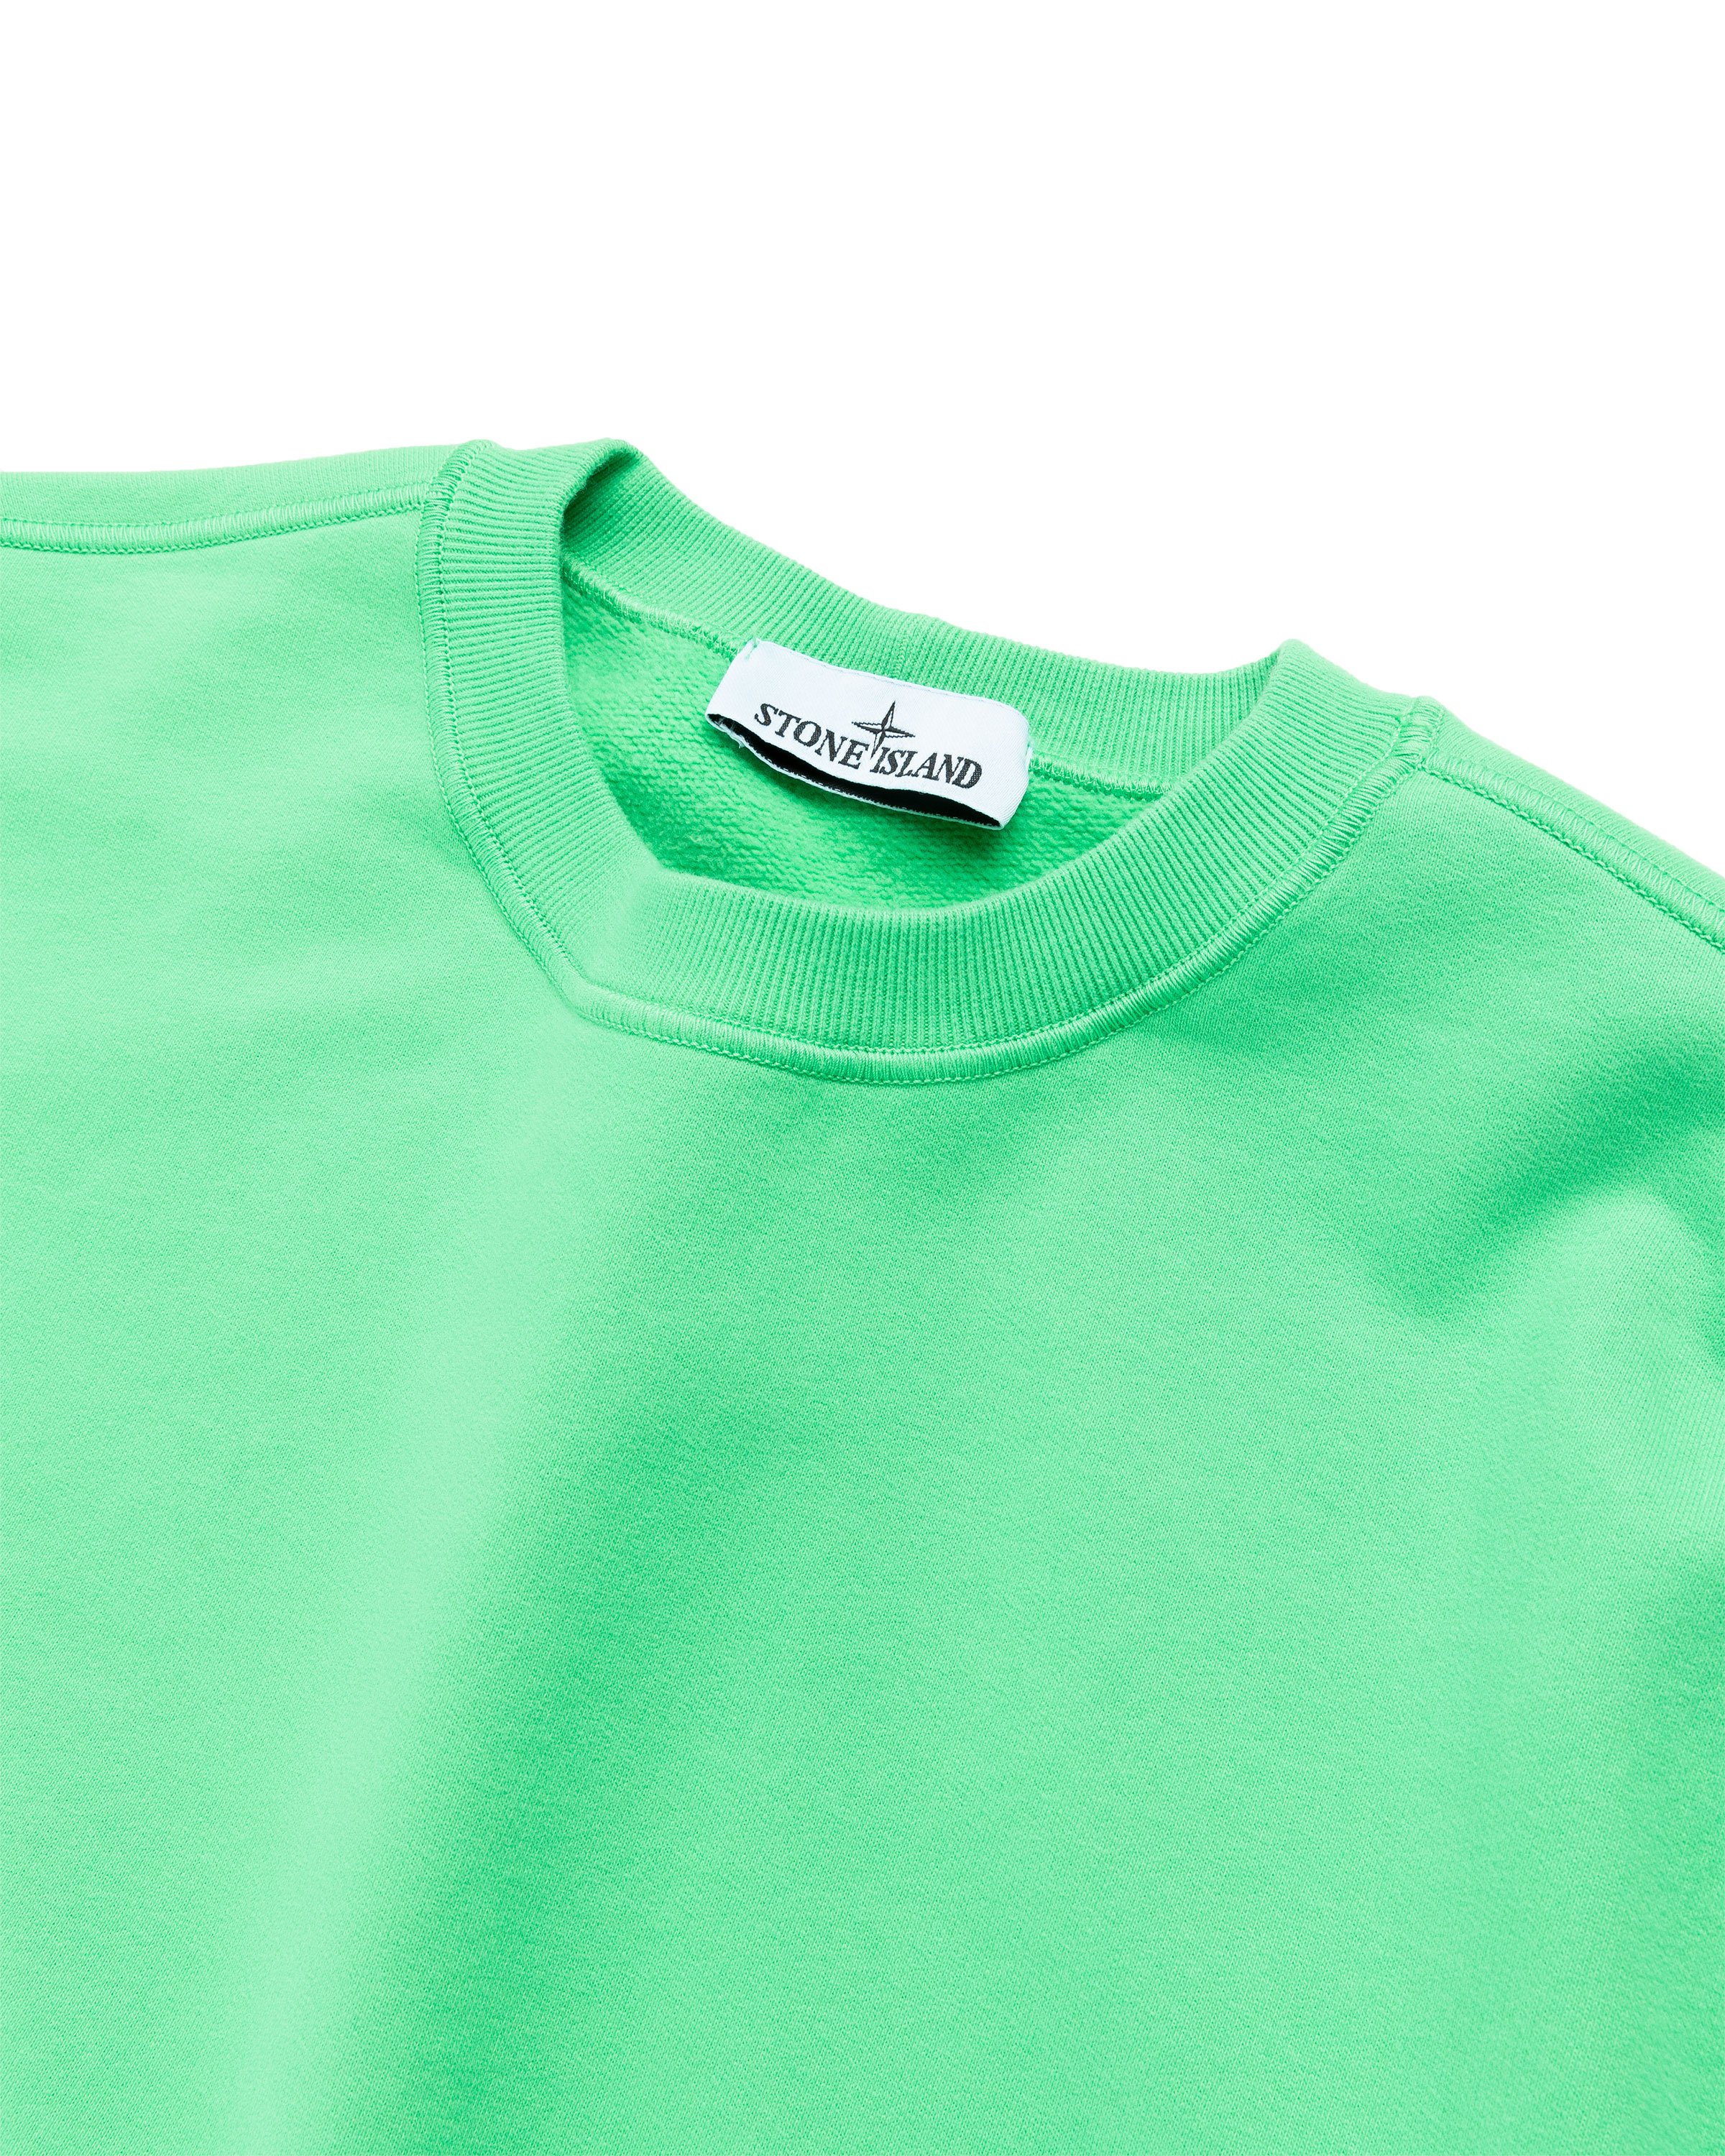 Stone Island - Garment-Dyed Fleece Crewneck Sweatshirt Light Green - Clothing - Green - Image 3